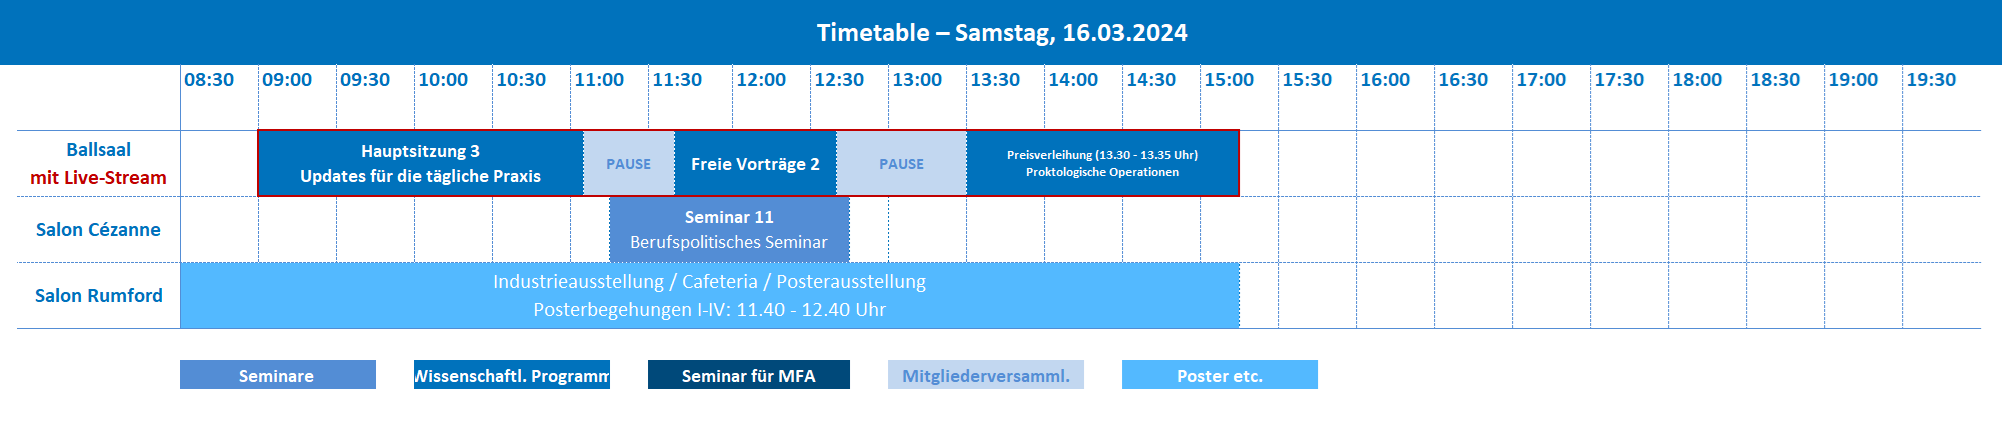 DGK2024 Timetable Samstag